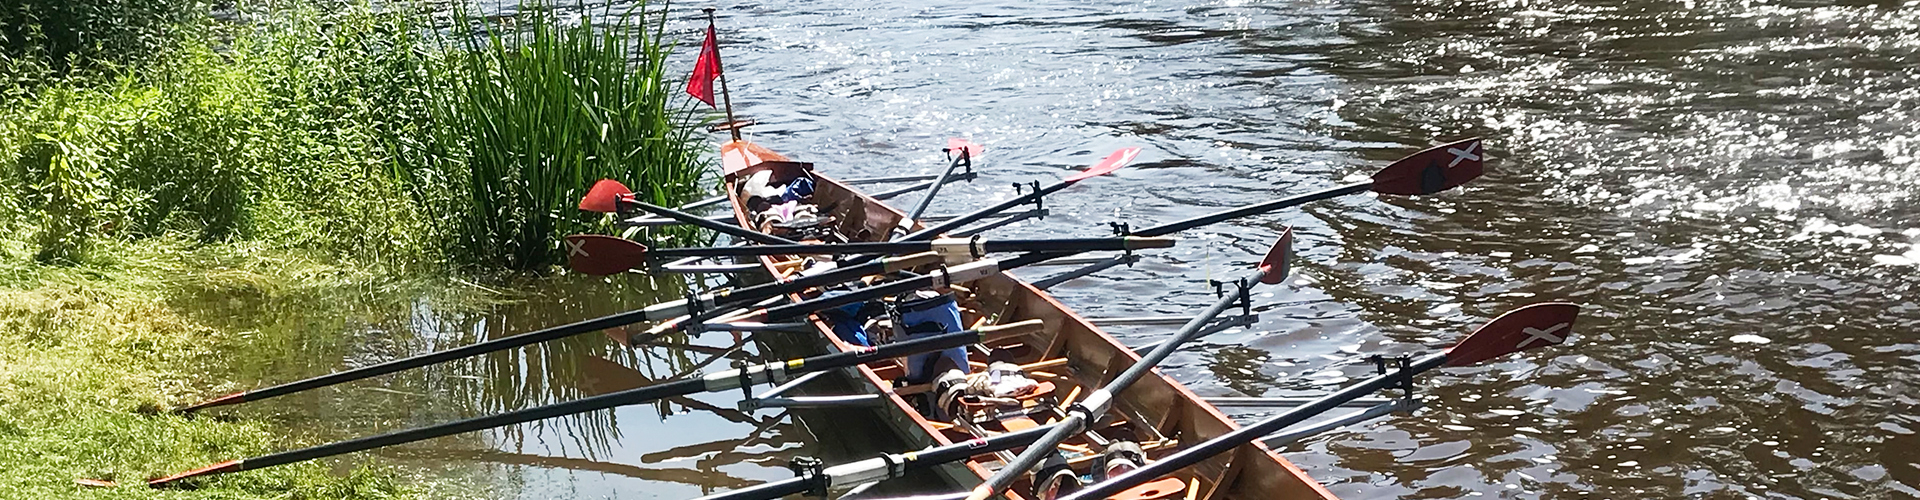 Vienna Rowing Challenge 2019